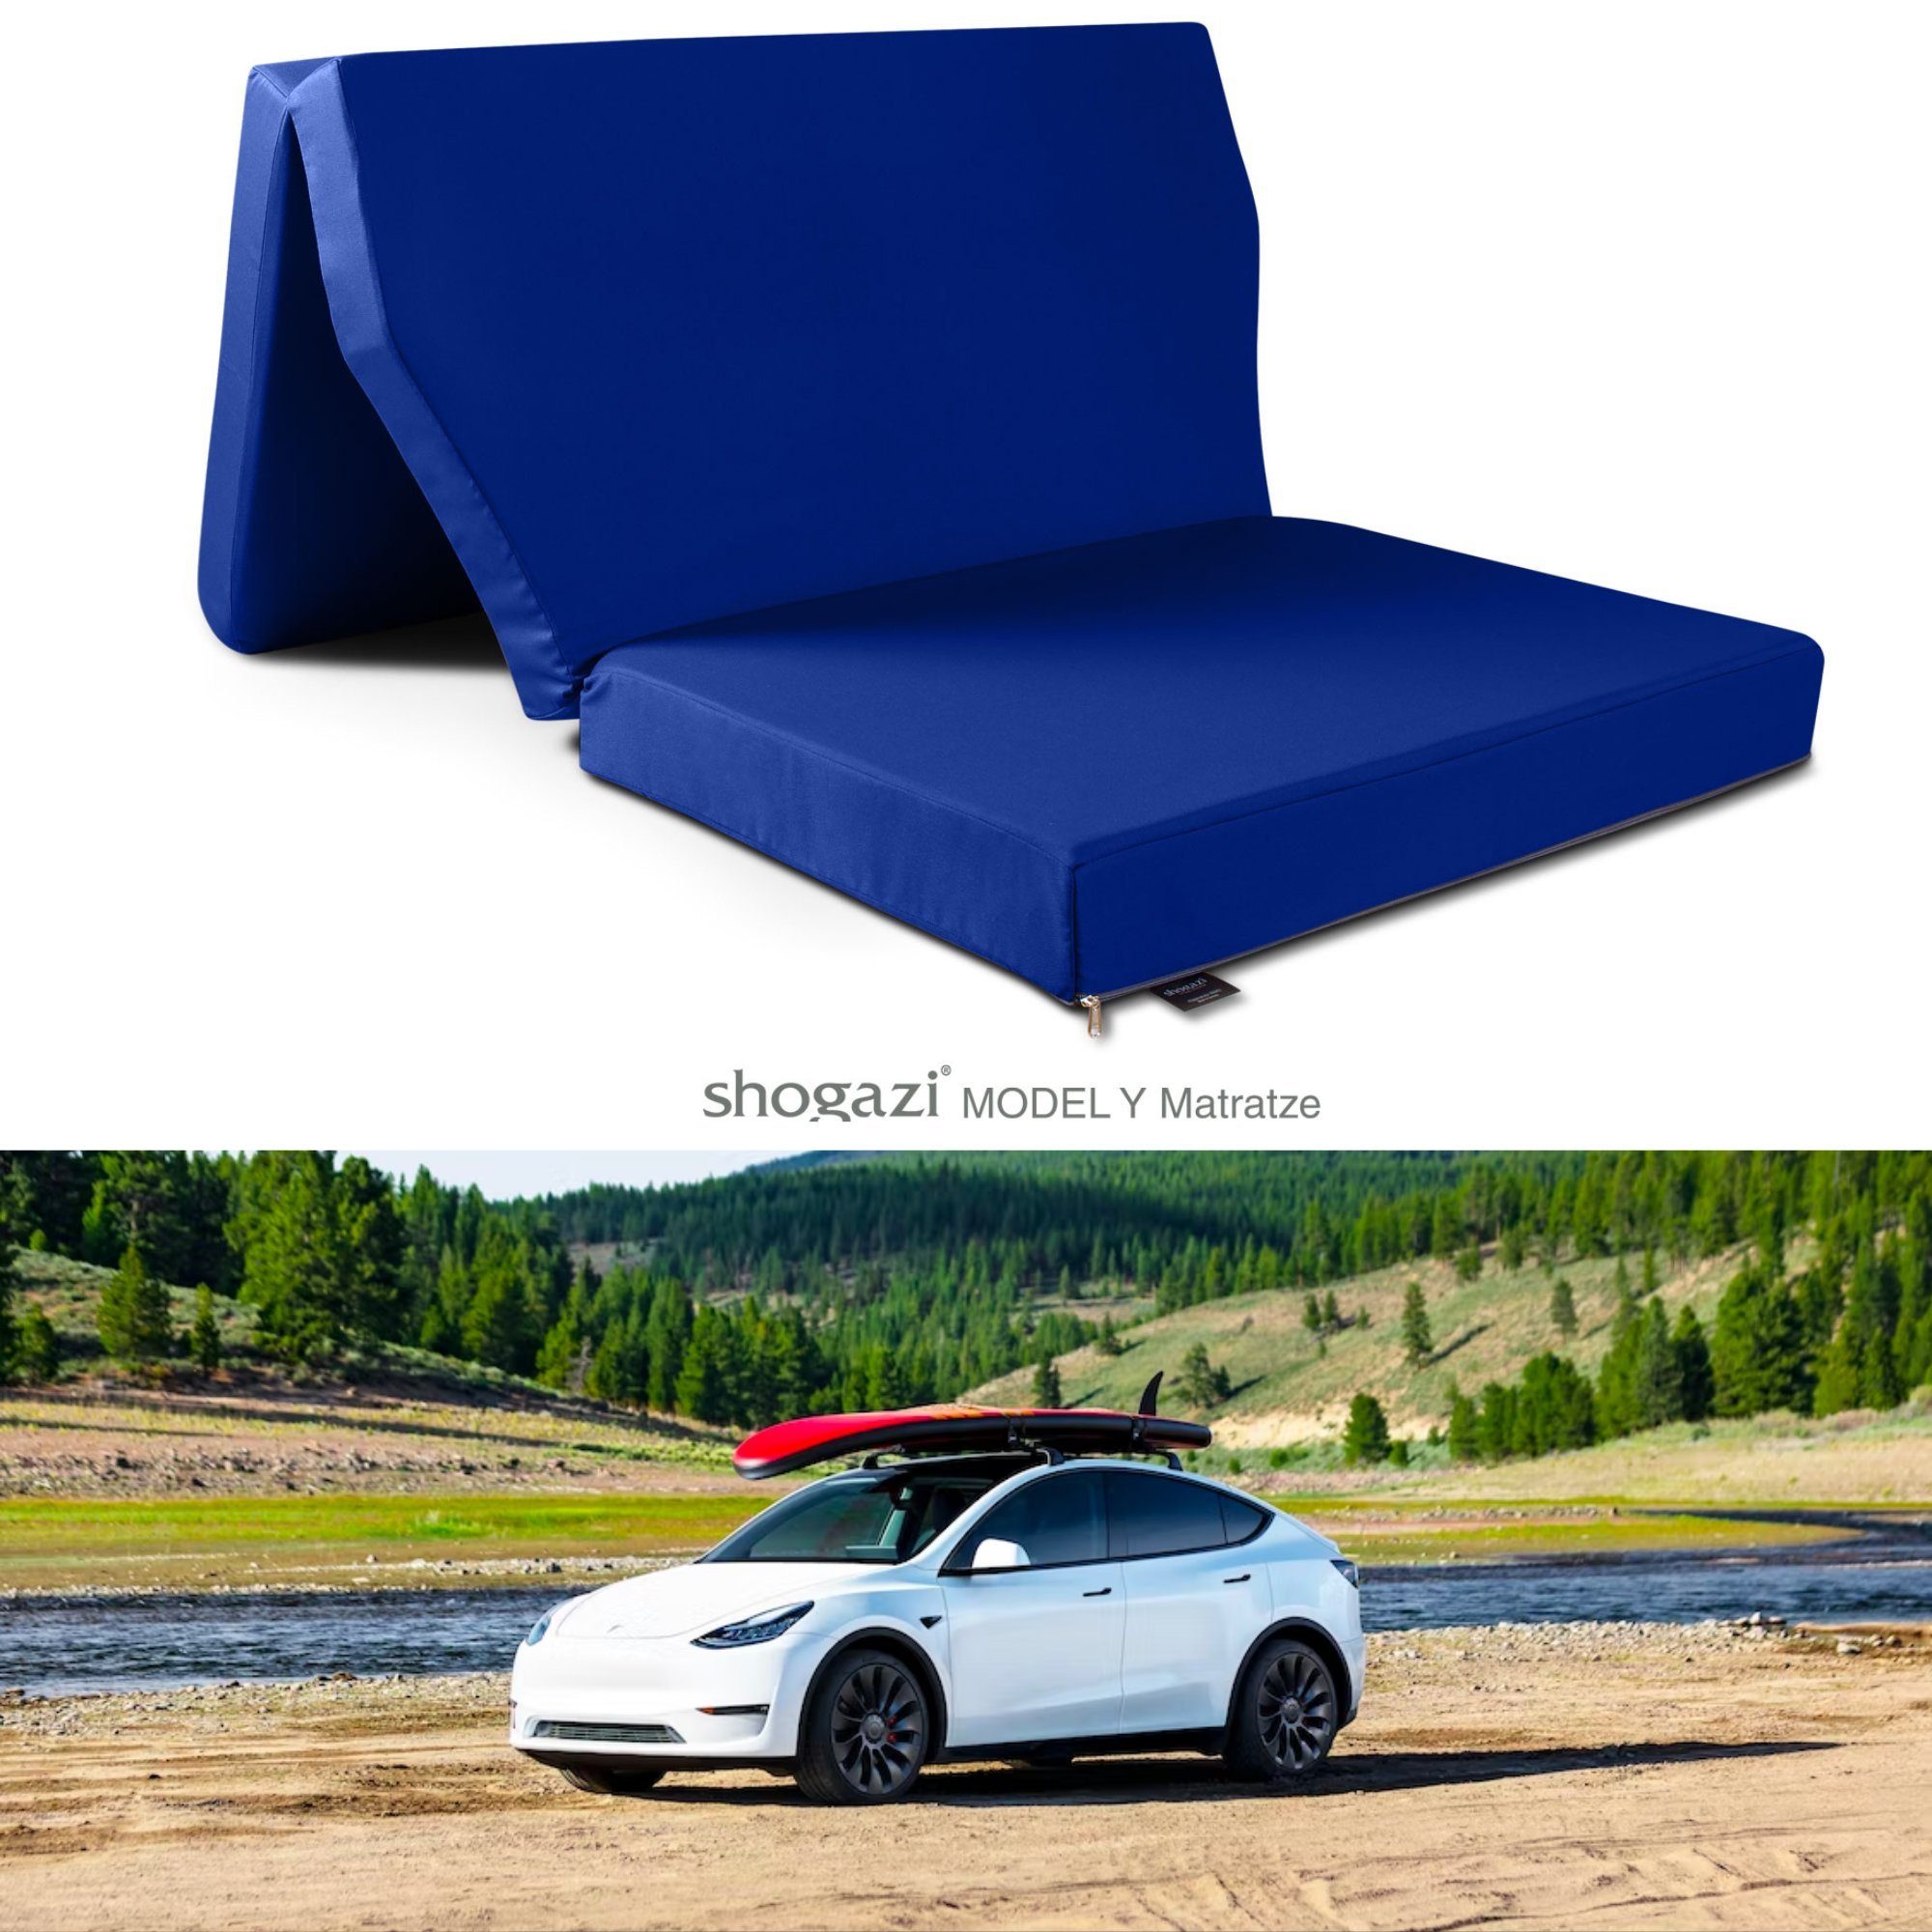 Klappmatratze Tesla Matratze Modell Y, Auto Camping Matratze, shogazi ®, 12 cm hoch, (Set), 3-teilig mit abnehmbarem Bezug, Maße: 120x200cm marine